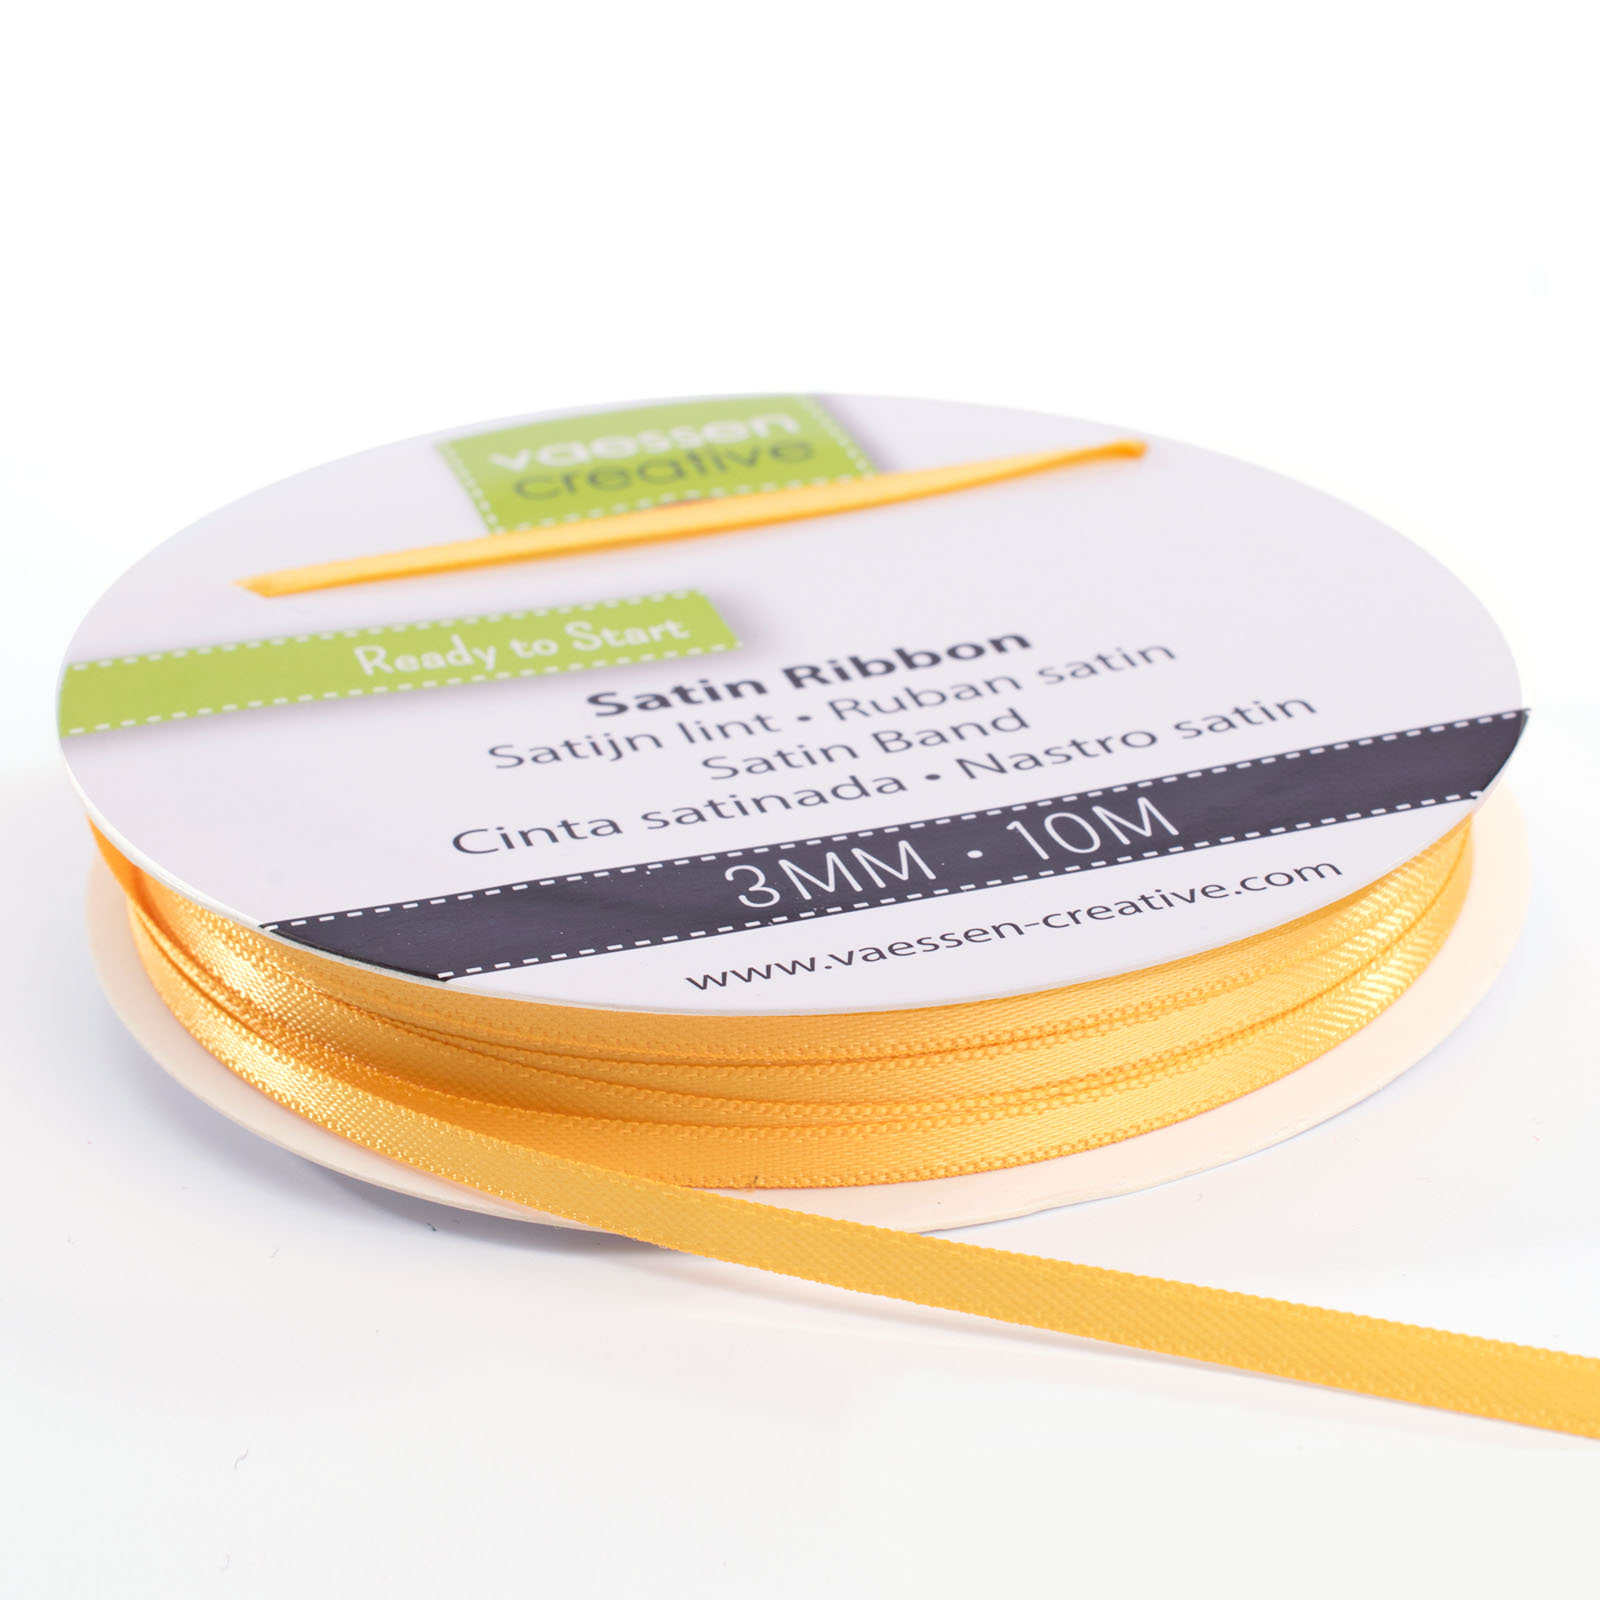 Vaessen Creative • Satin Ribbon 3mmx10m Yellow Gold